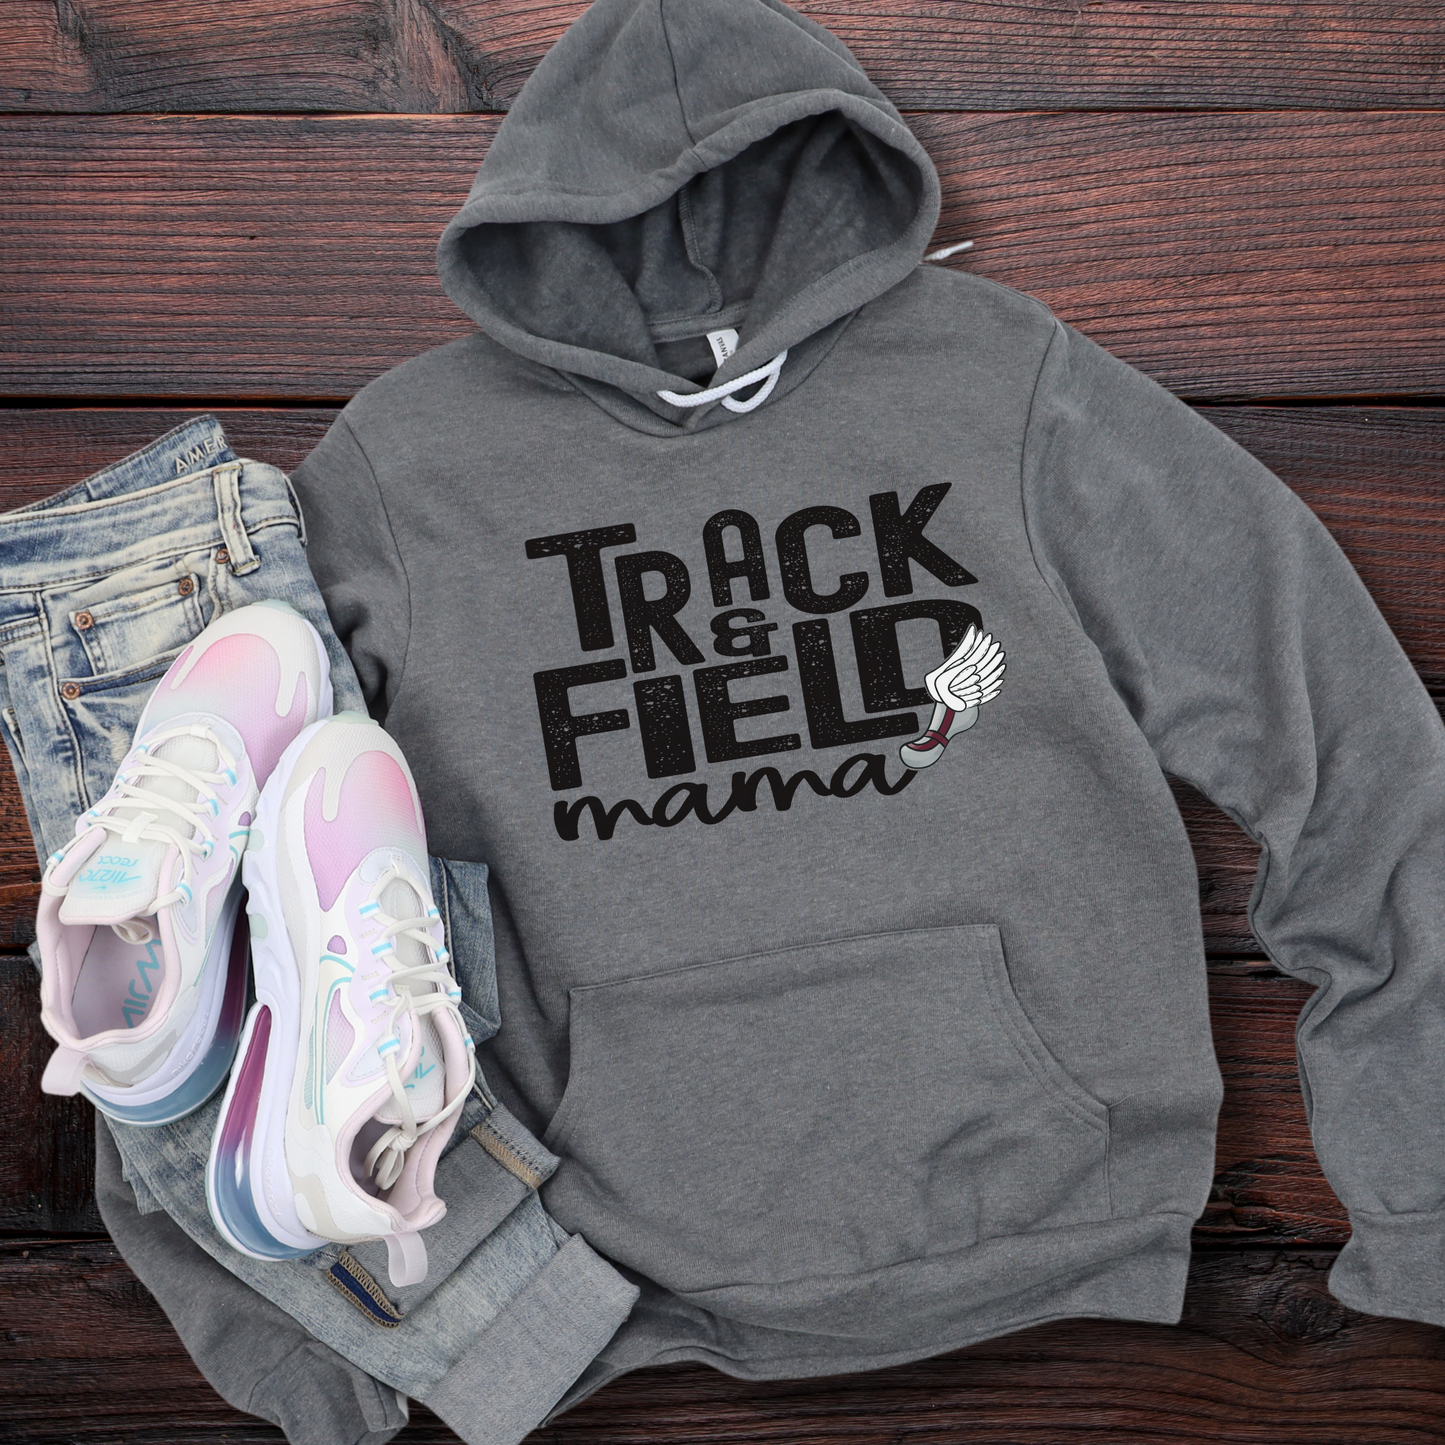 Track & Field Mama